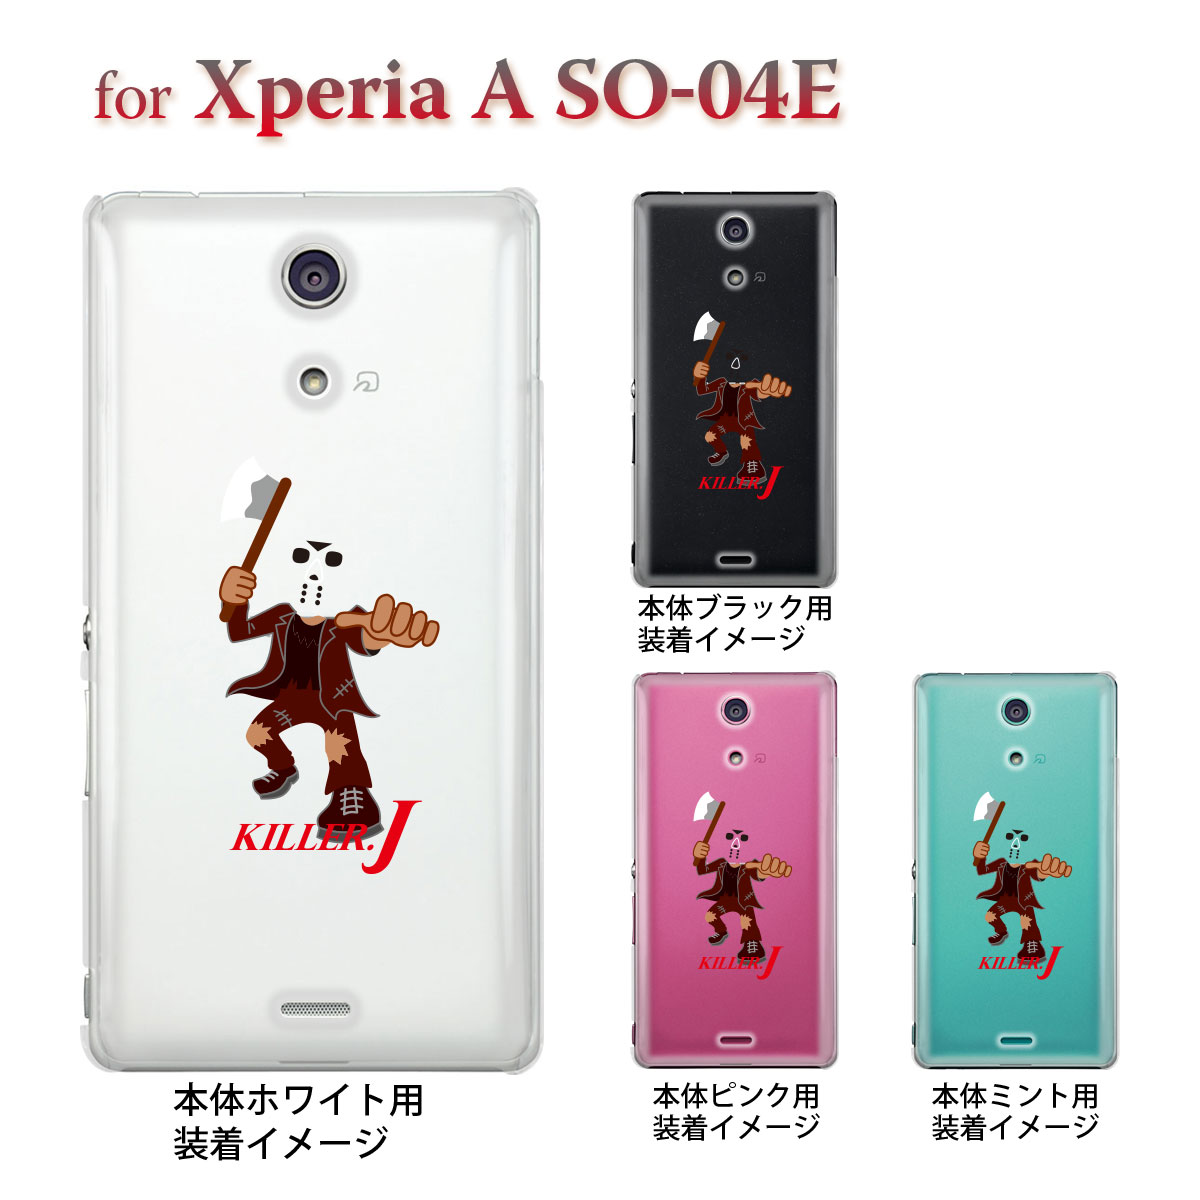 【Xperia A SO-04E】【ケース】【カバー】【スマホケース】【クリアケース】【ユニーク】【MOVIE PARODY】【KILLER.J】 10-so04e-ca0054